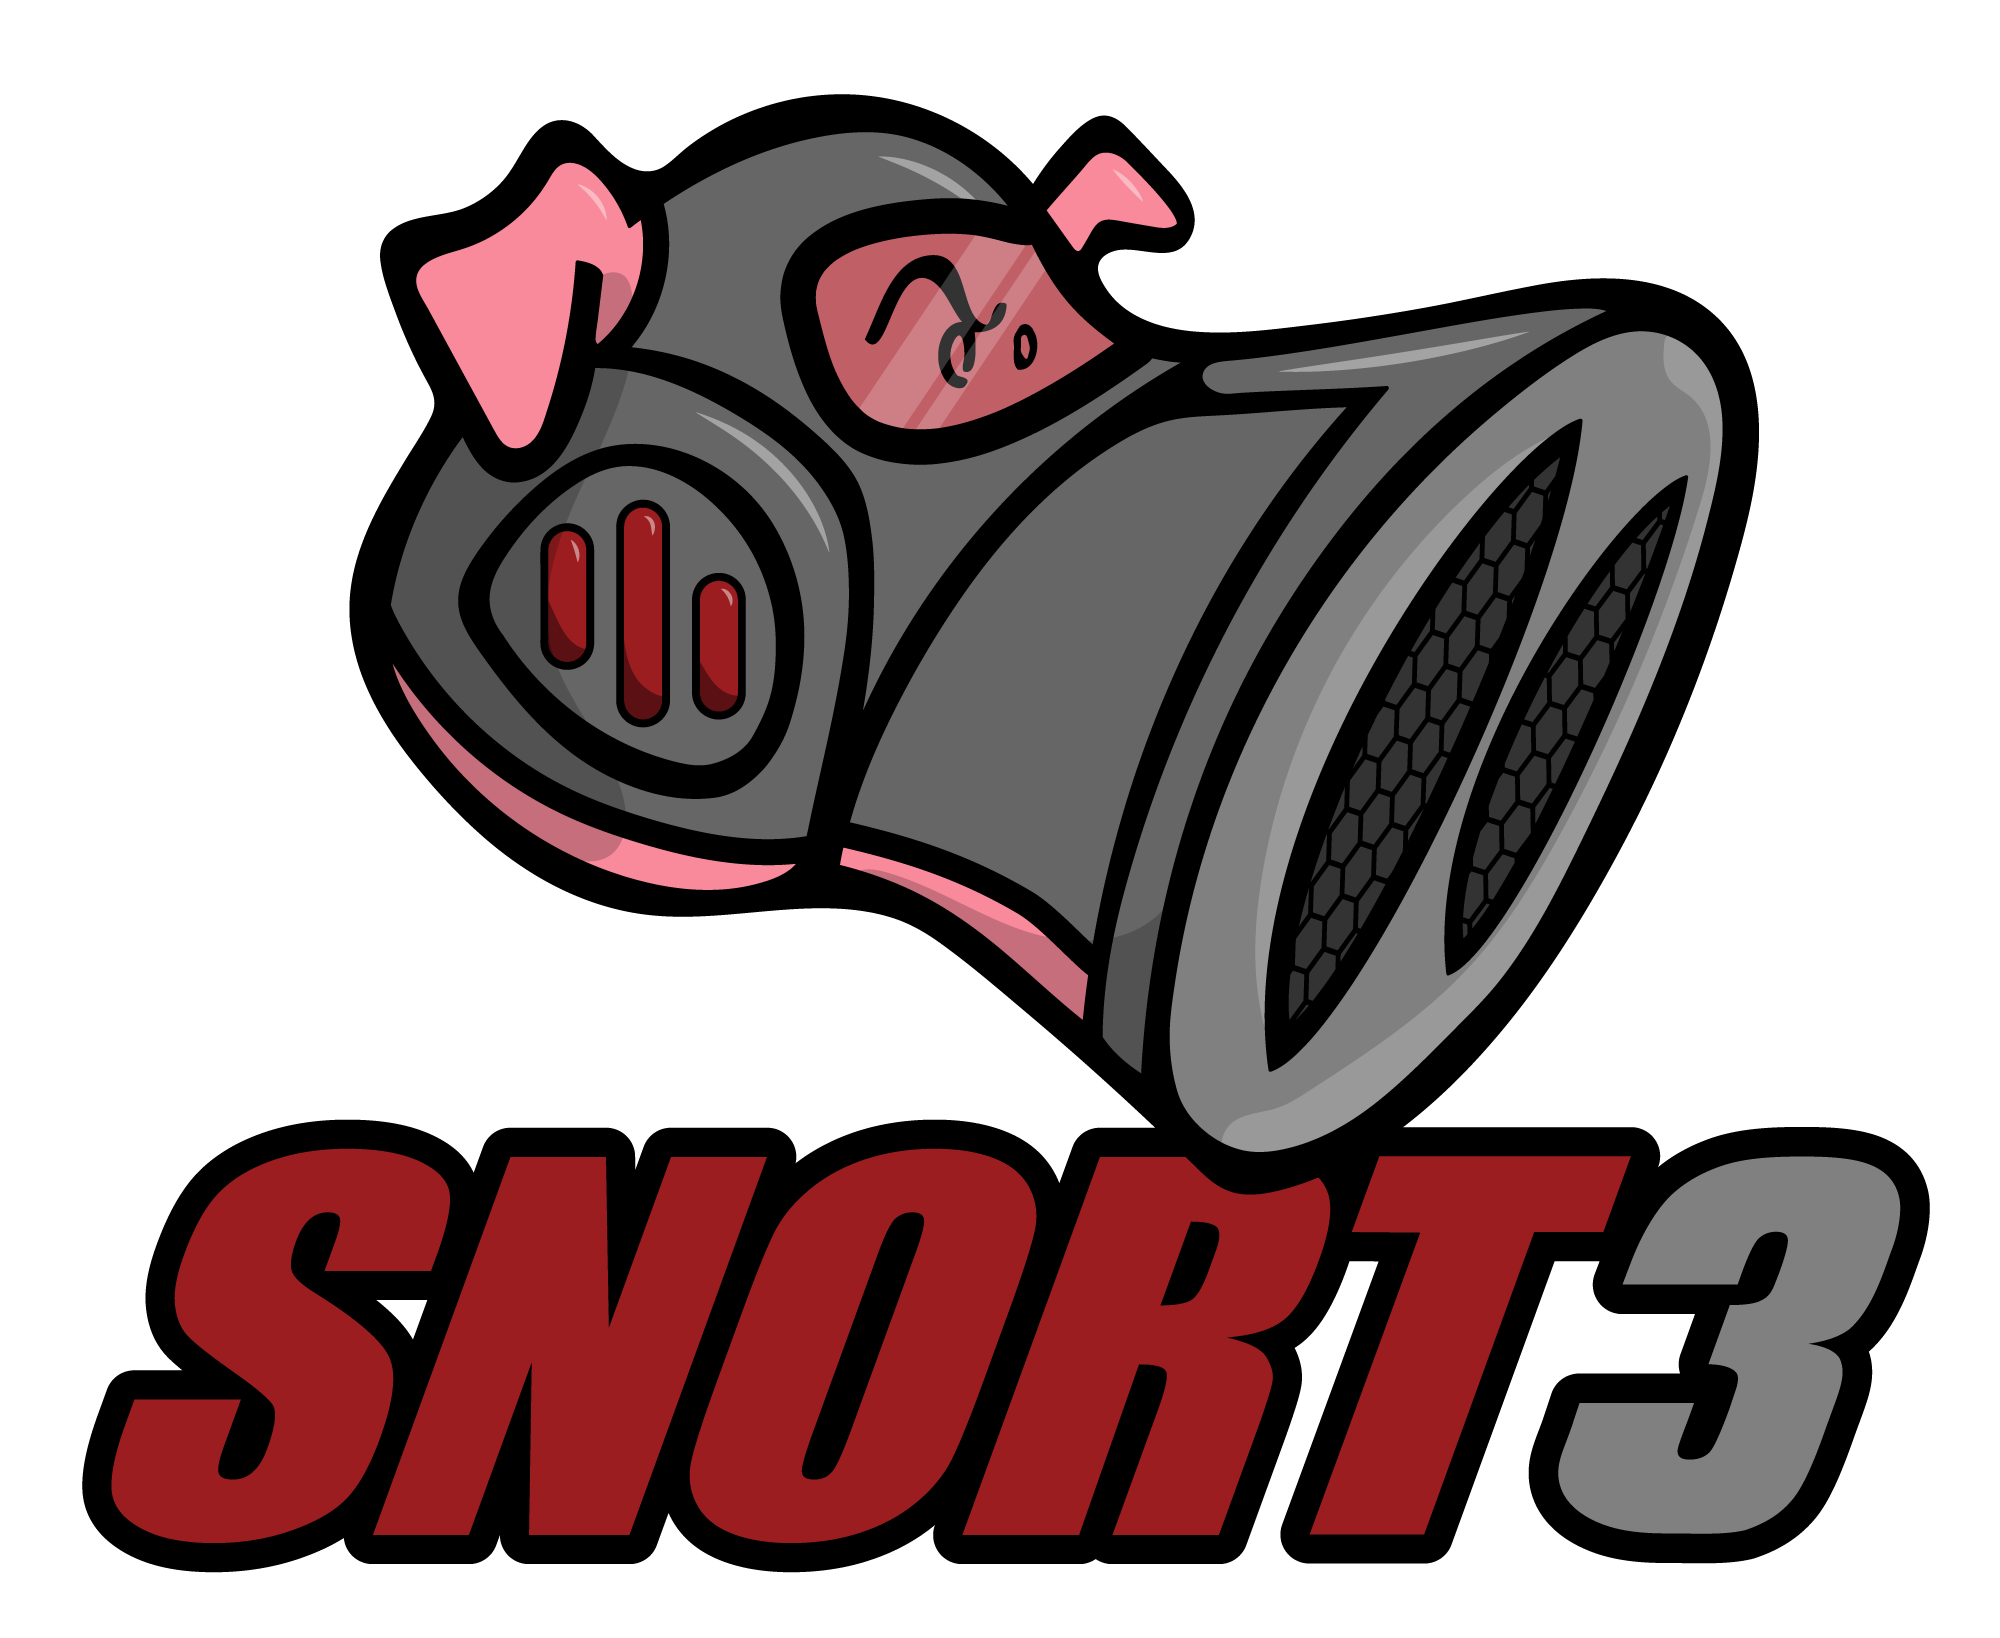 Snort 3 logo